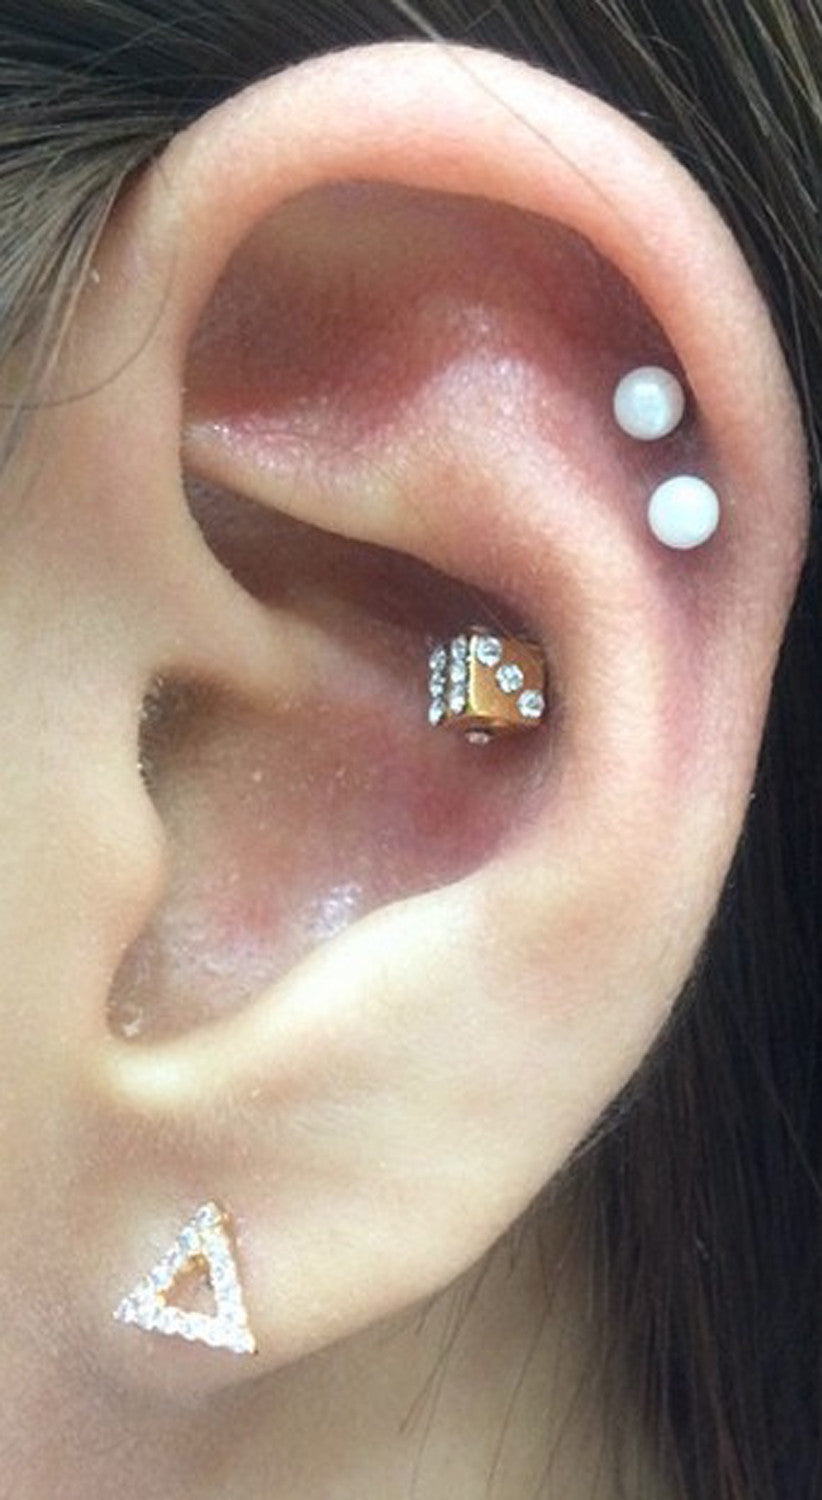 Unique Ear Piercing Ideas at MyBodiArt.com - Pearl Cartilage Helix Ear Stud Earrings Dice Rook Conch Stud 